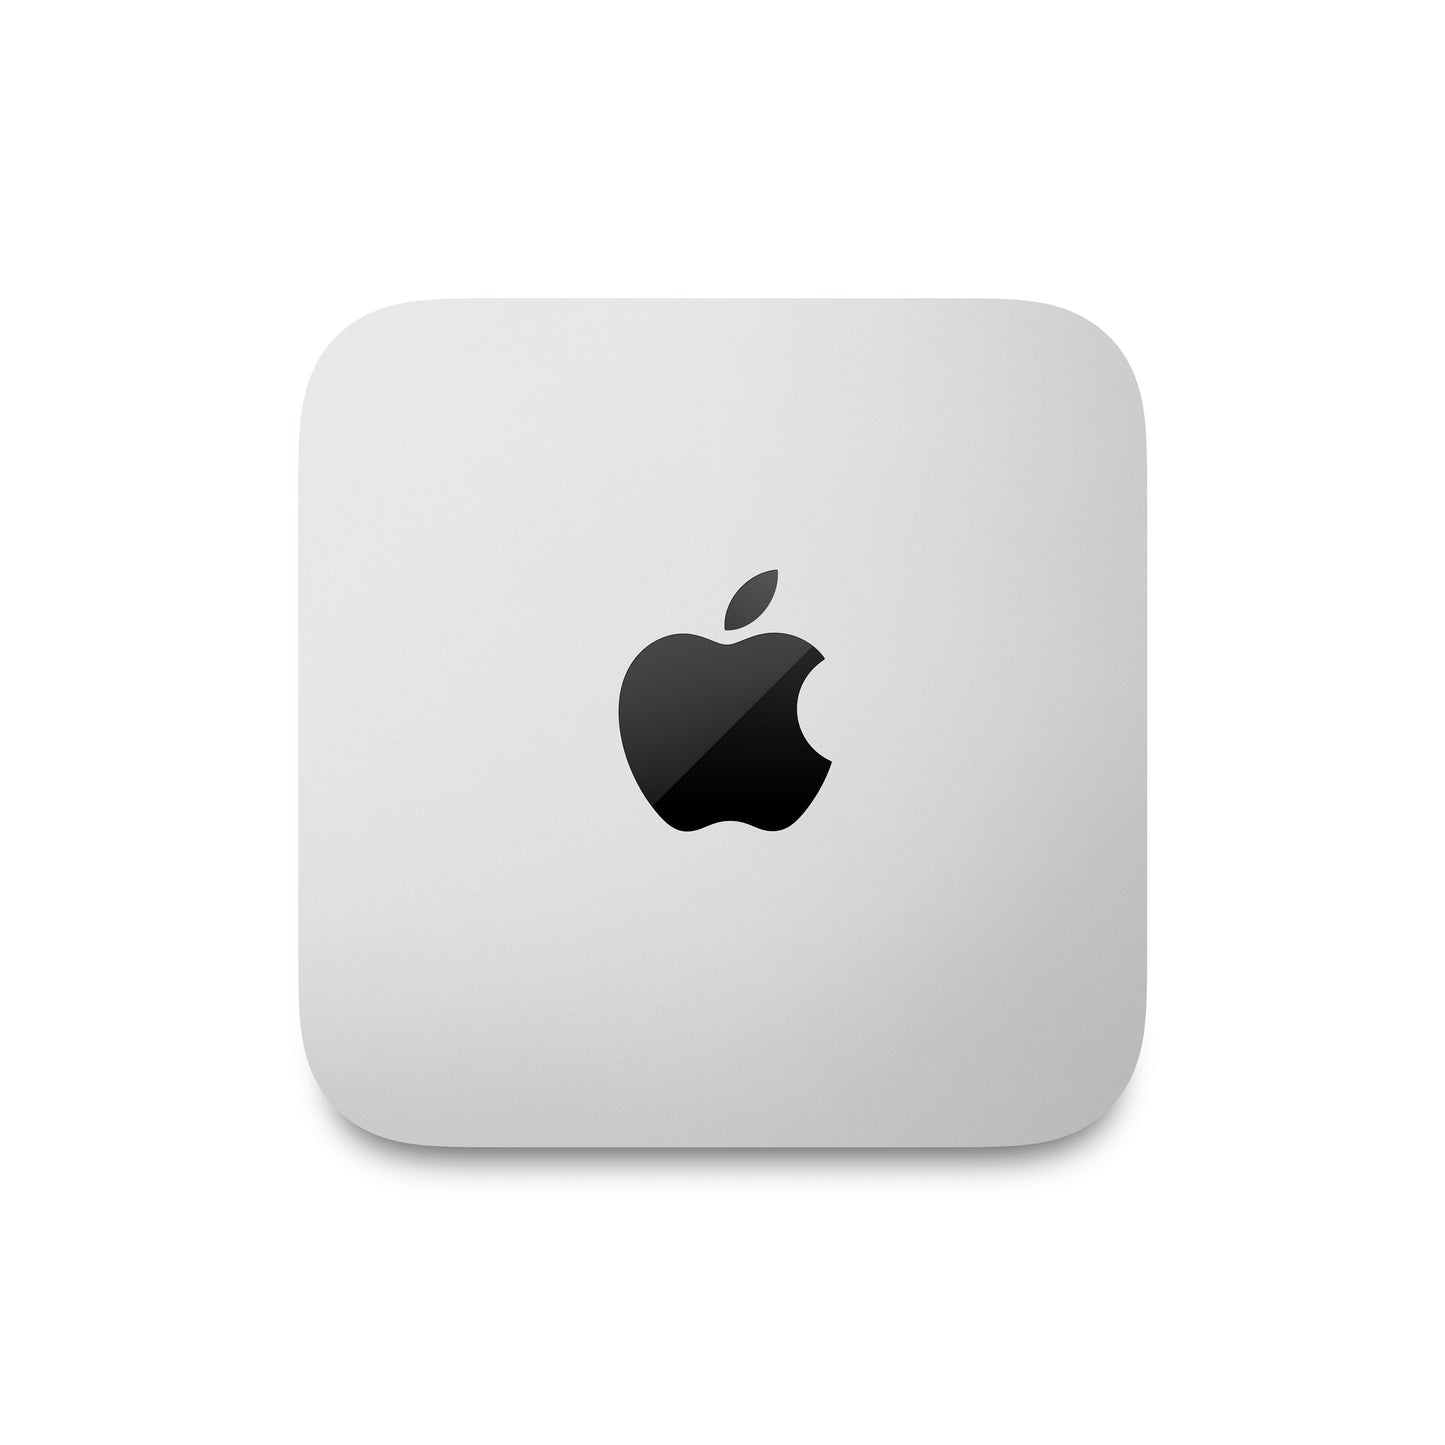 "Mac Studio: Apple M1 Max chip with 10 core CPU and 24_core GPU, 512GB SSD"